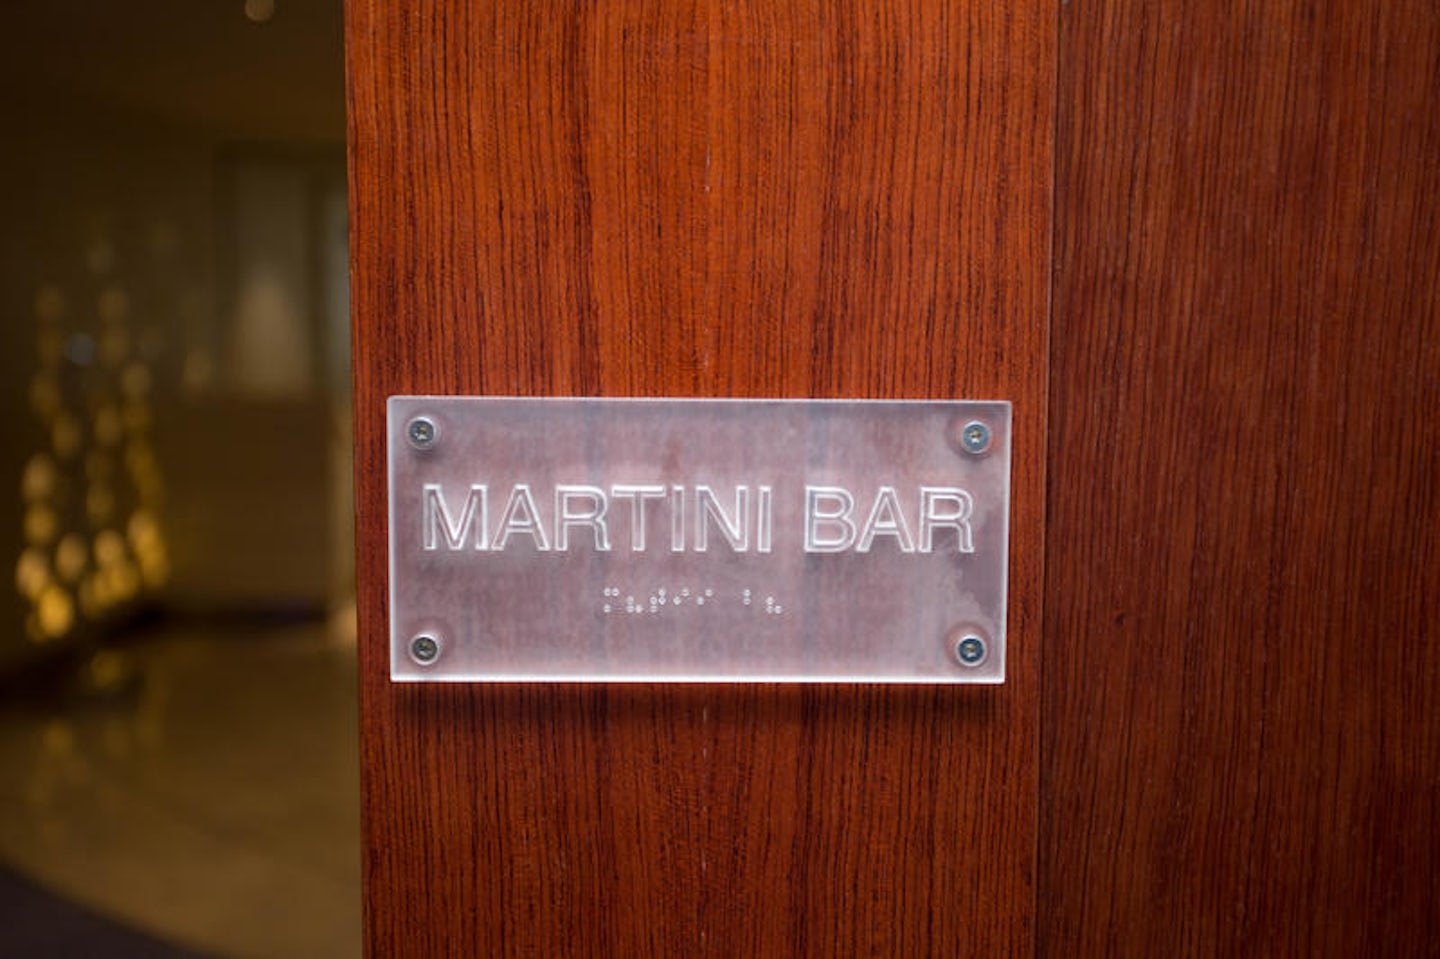 Martini Bar on Celebrity Solstice